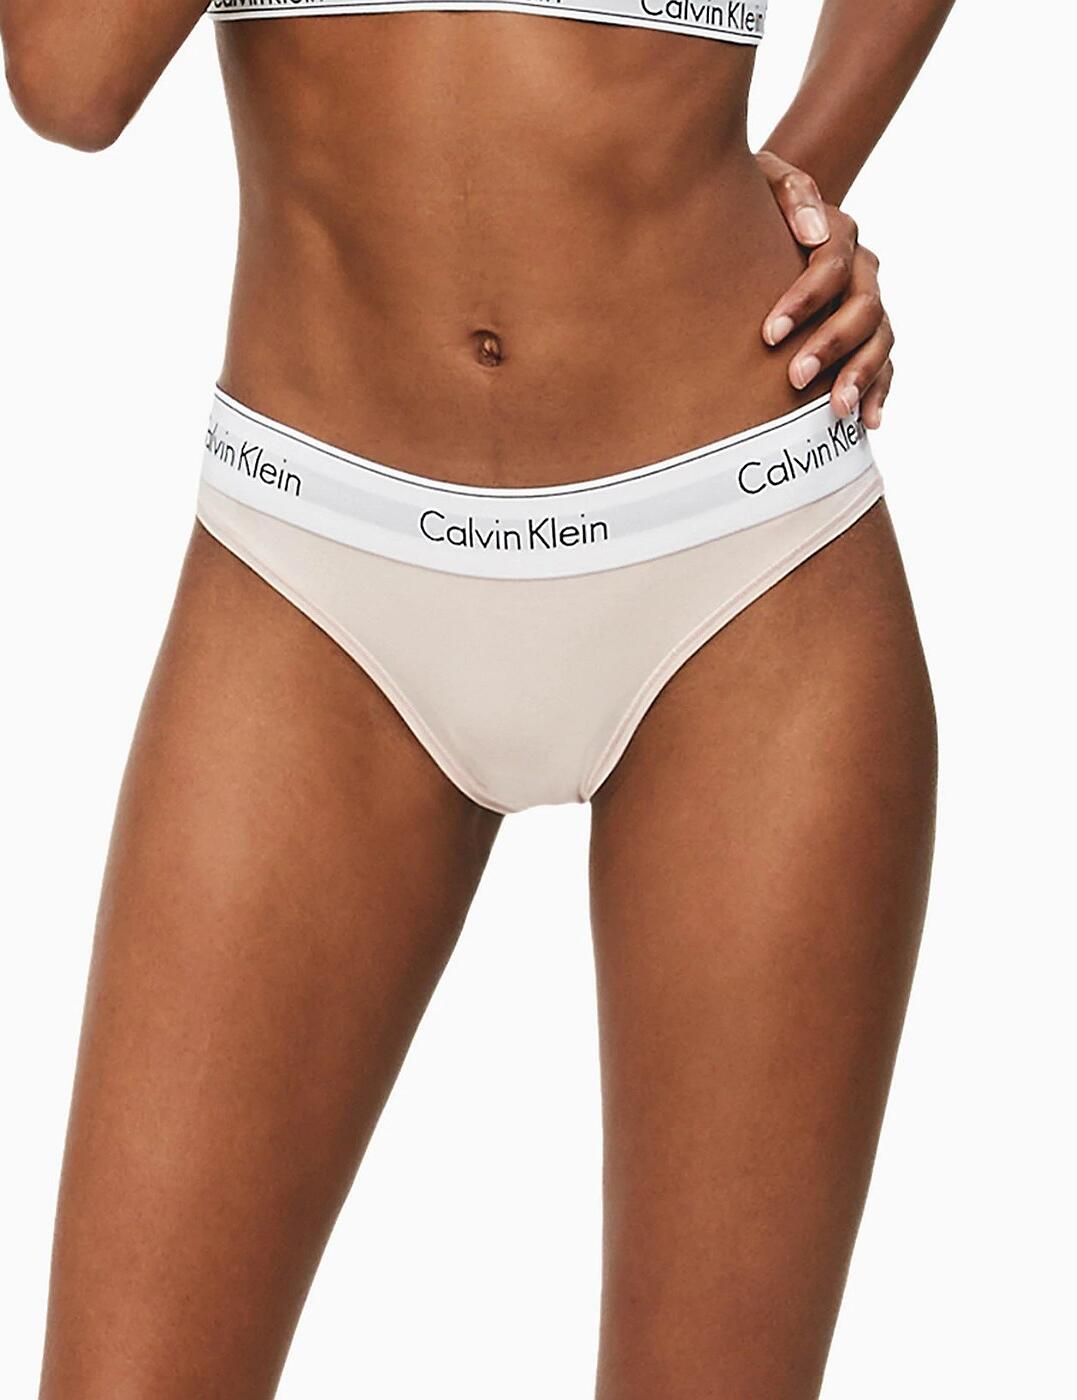 Calvin Klein Modern Cotton Bikini Style Brief - Belle Lingerie